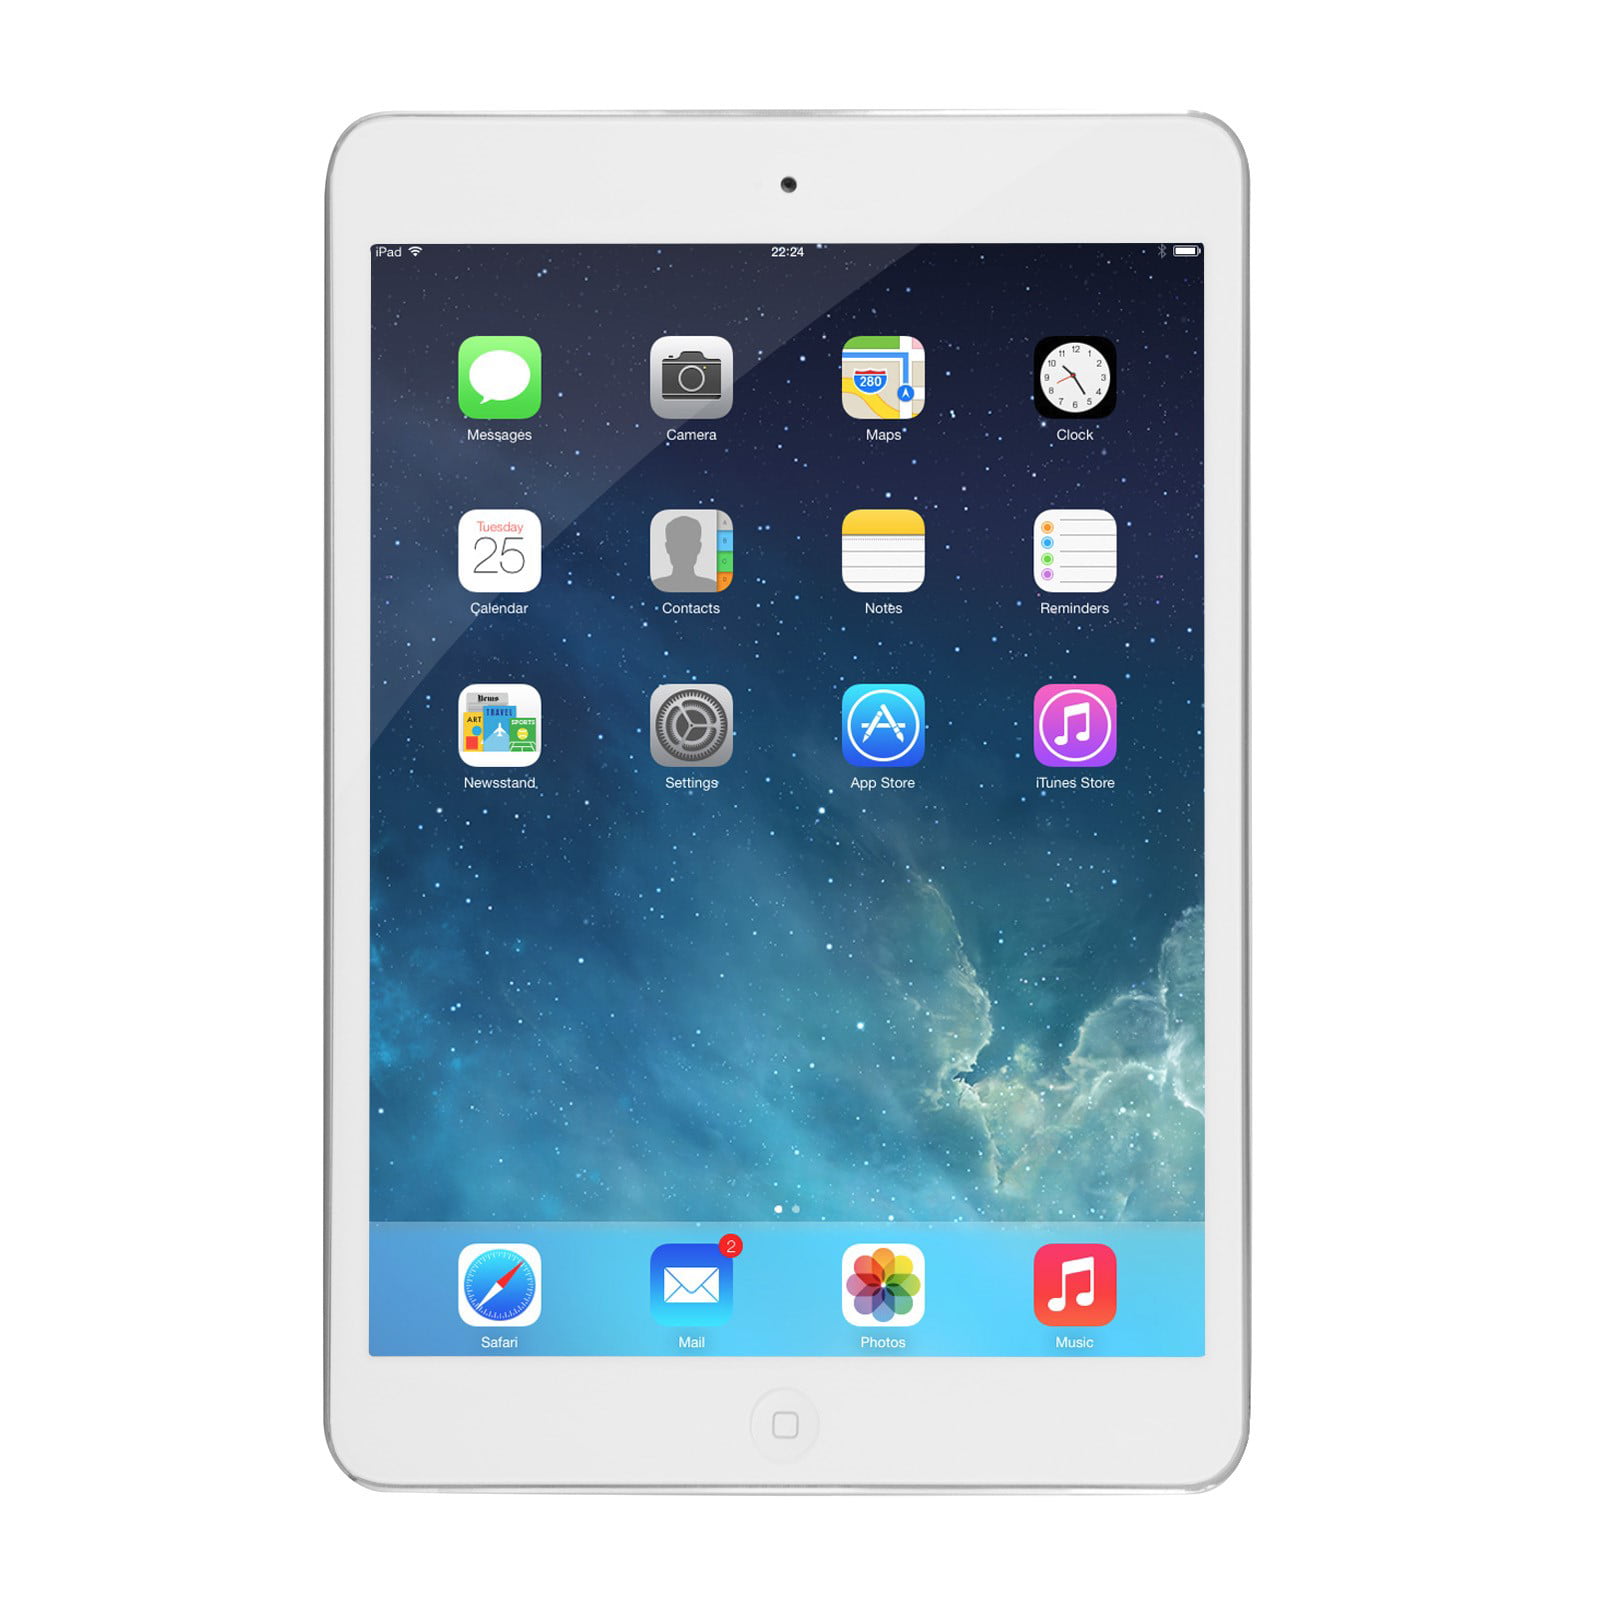 Apple iPad Mini 16GB Tablet - White (Certified Refurbished) - Walmart